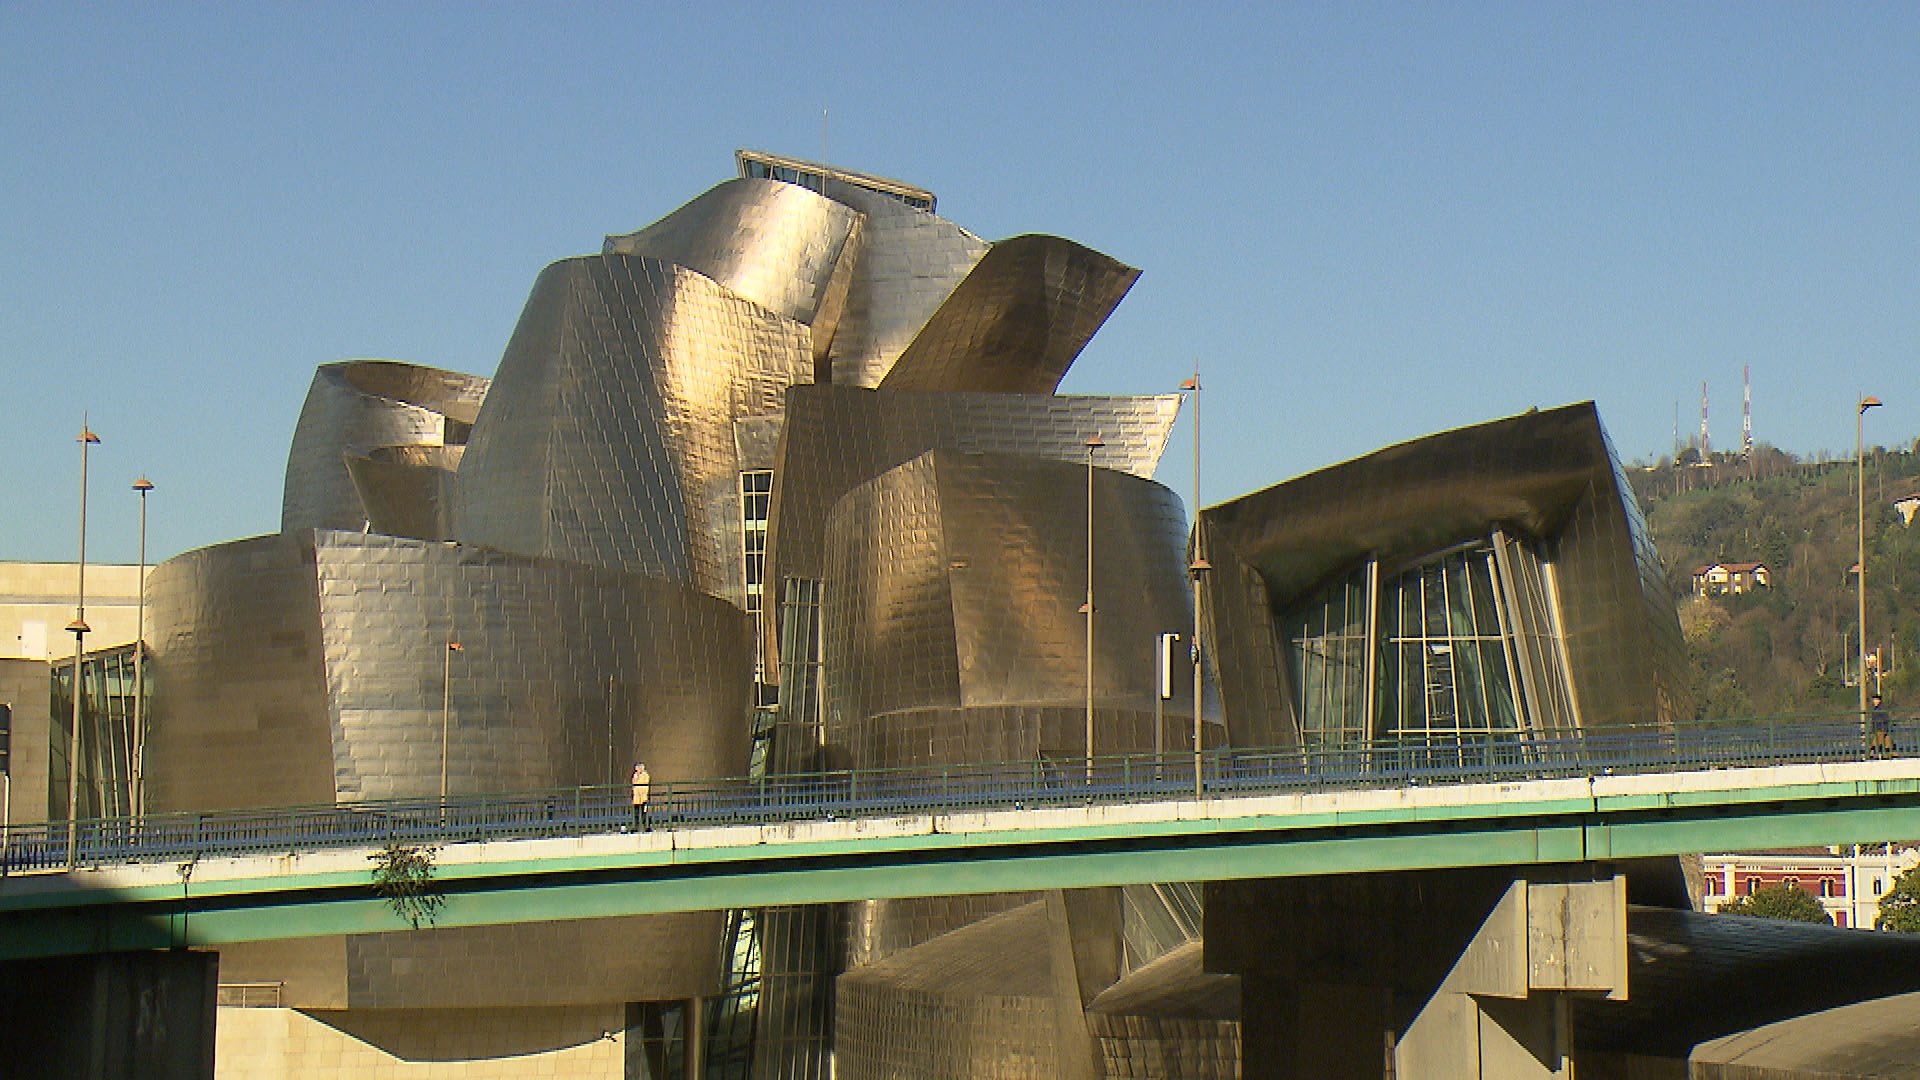 Guggenheim-museum